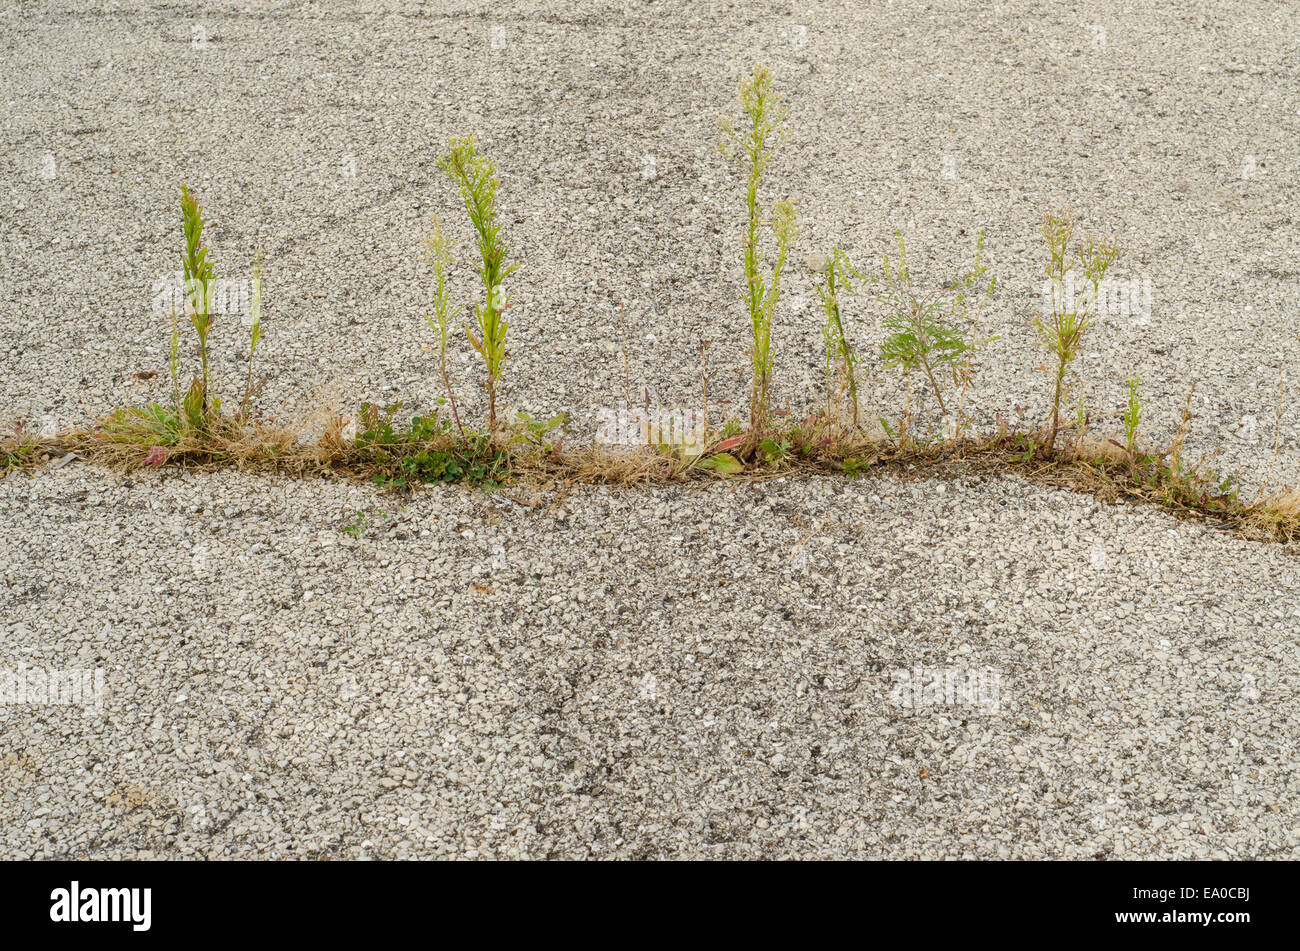 Weeds break through cracks in asphalt road Stock Photo